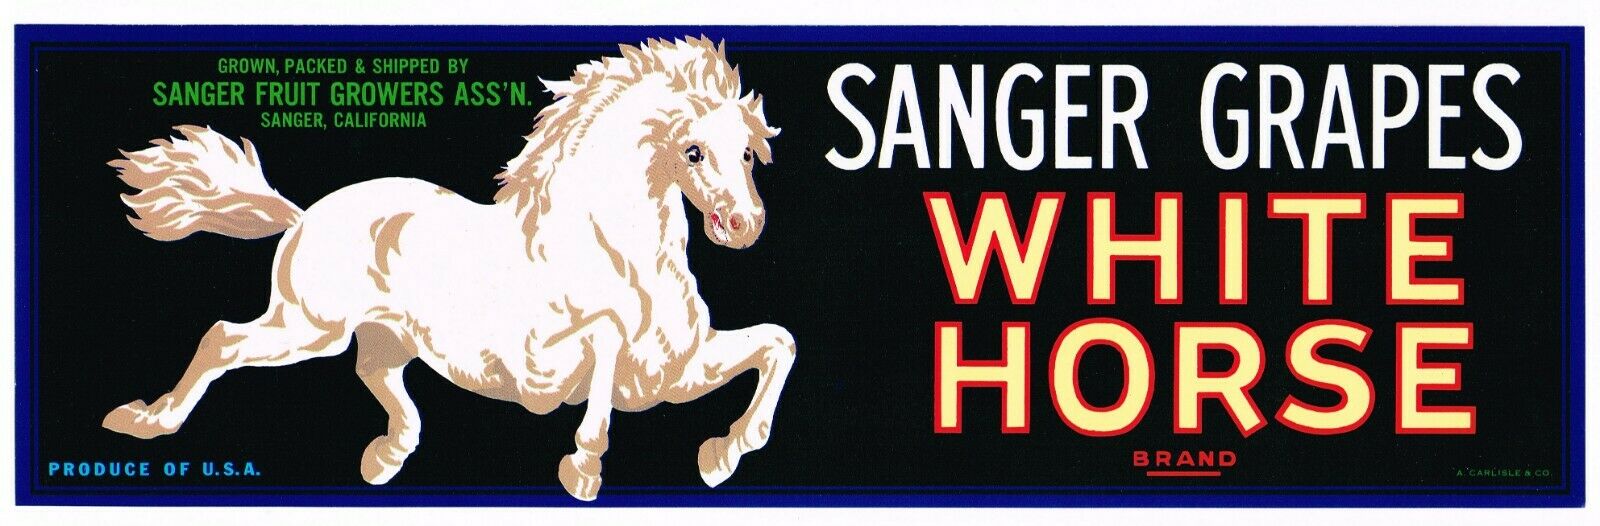 Sanger White Horse Brand Grape Crate Label